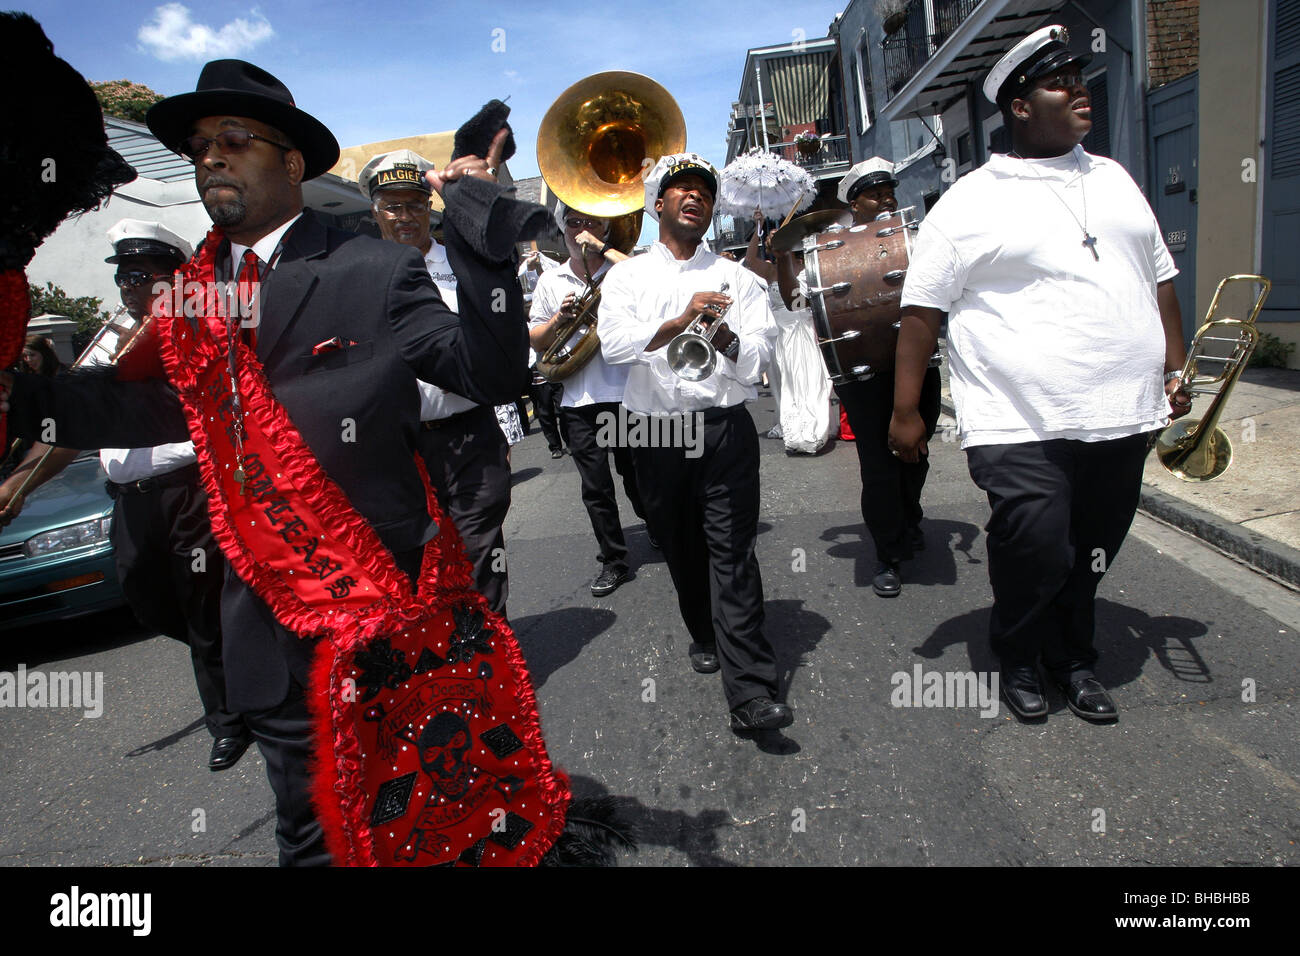 Algeri Brass Band, quartiere francese, New Orleans, Louisiana, Stati Uniti d'America Foto Stock